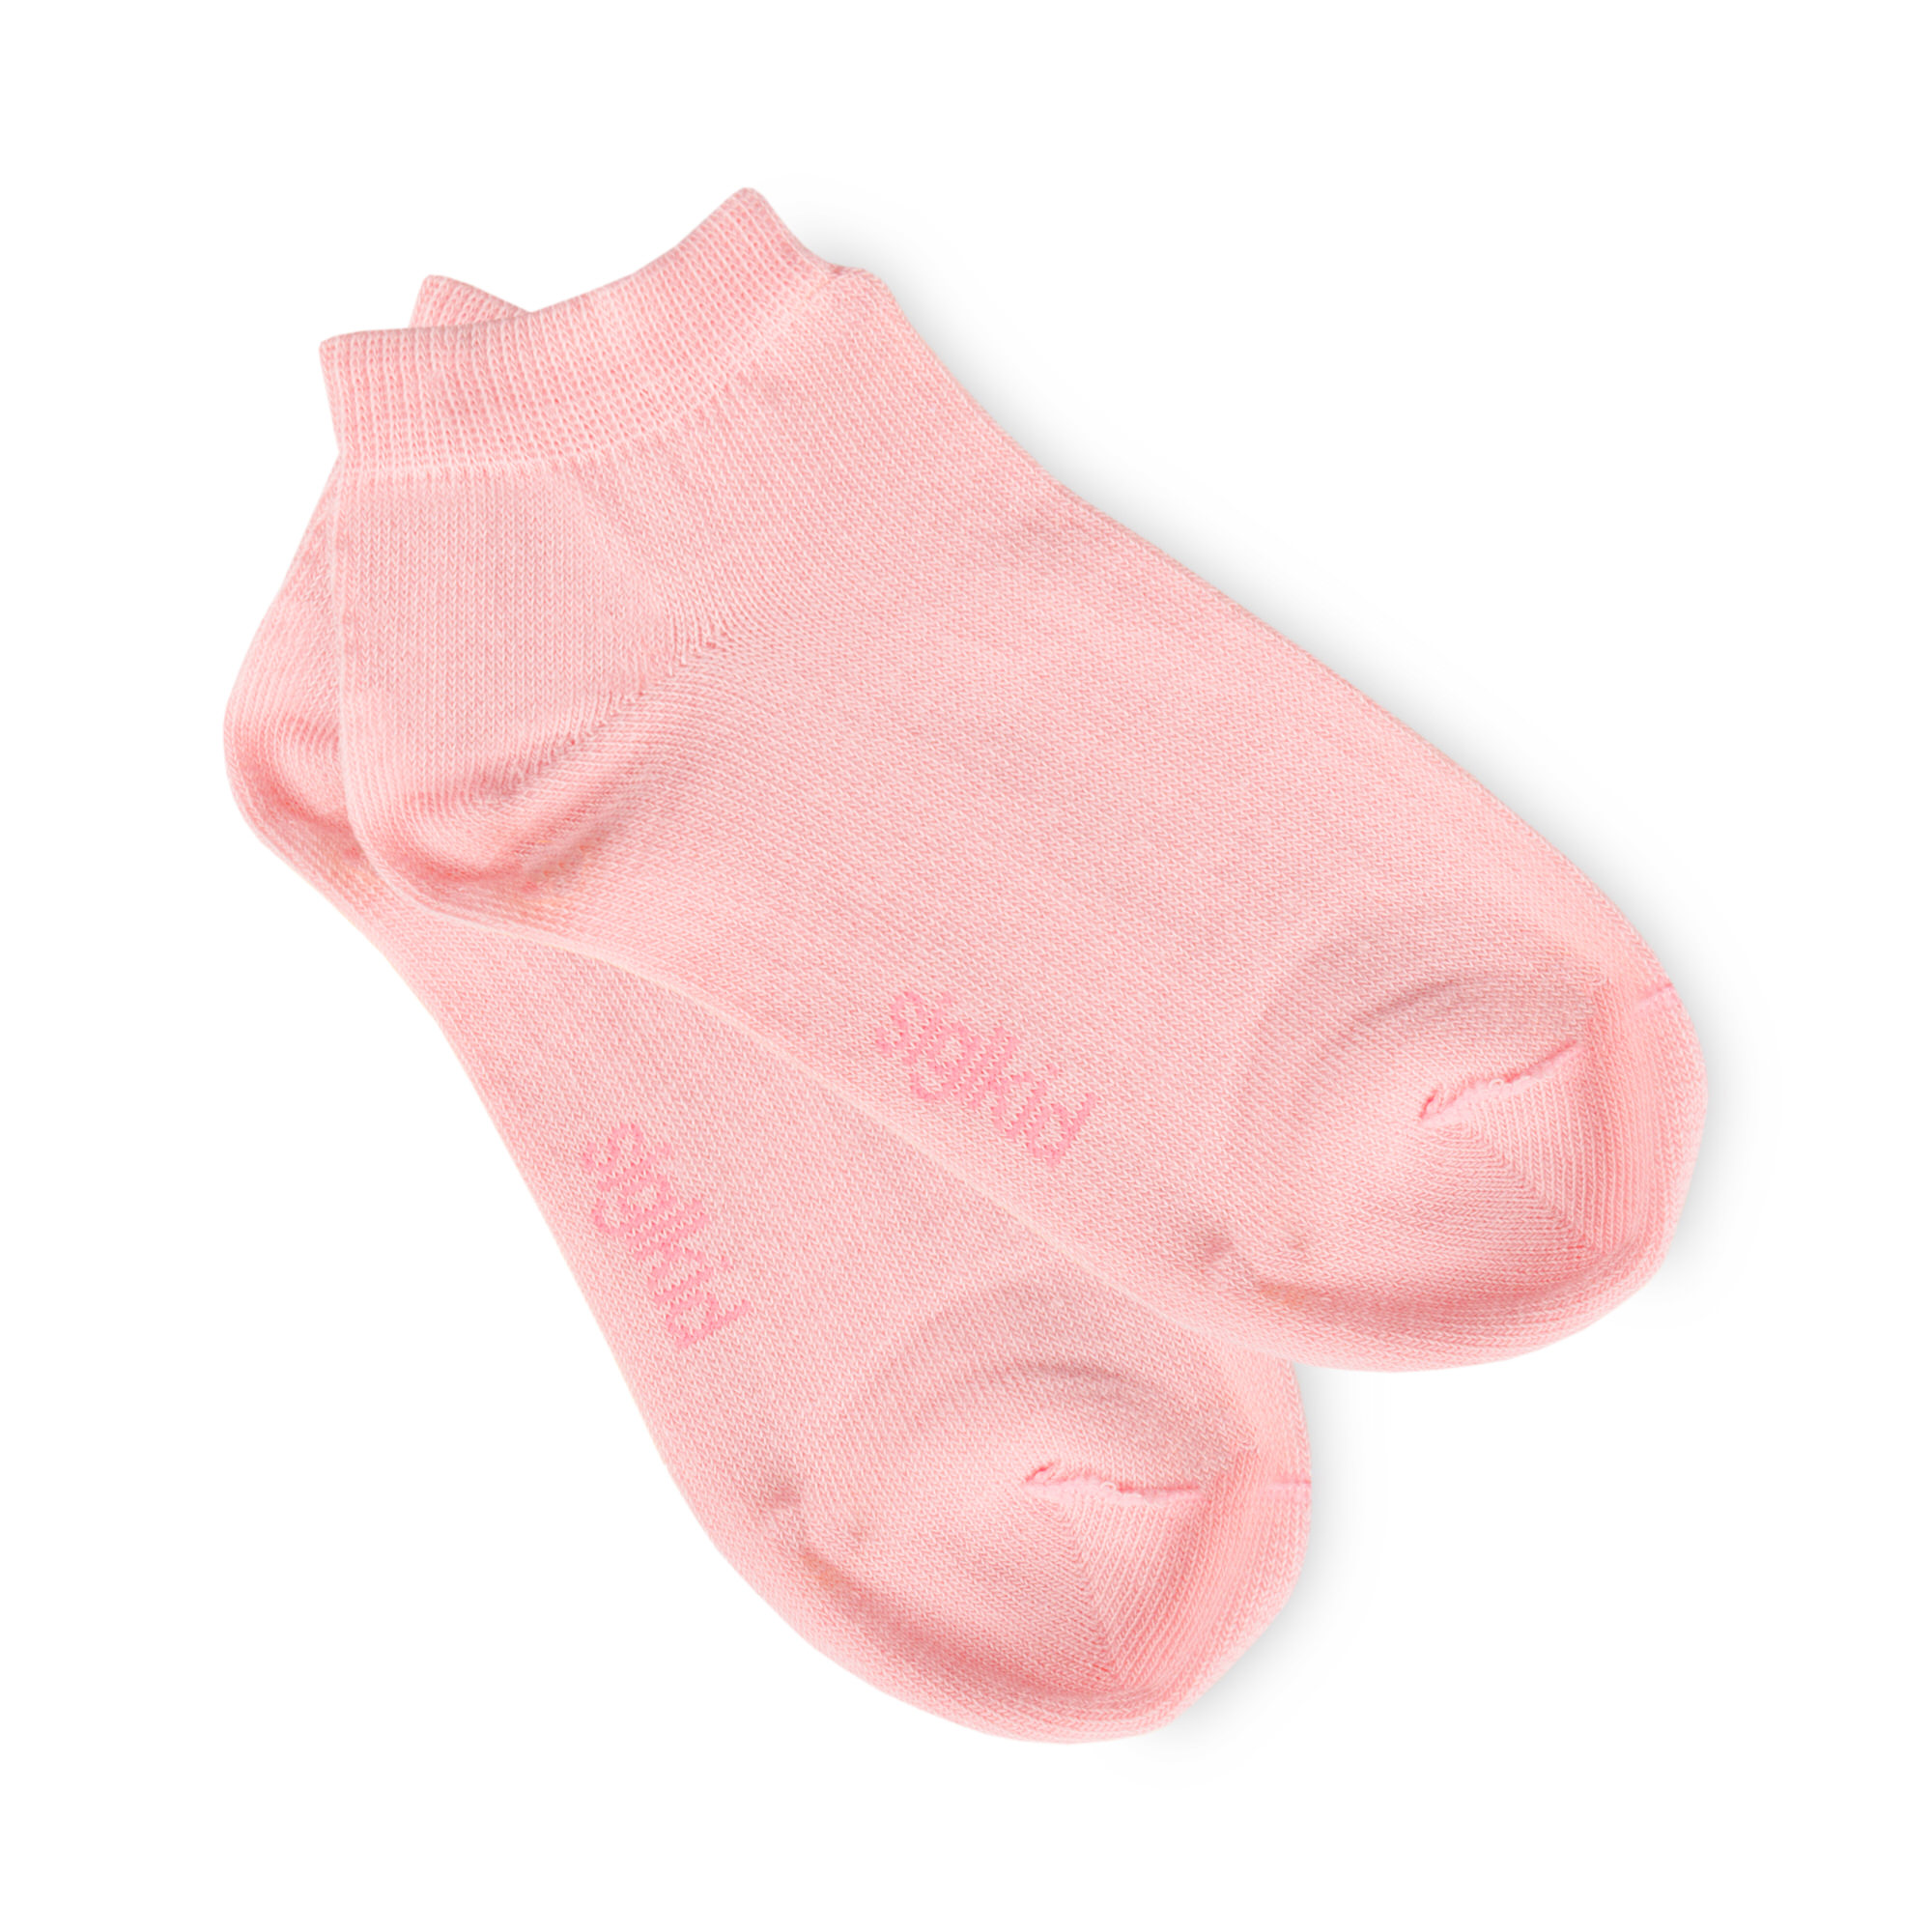 Children's trainer socks, pink